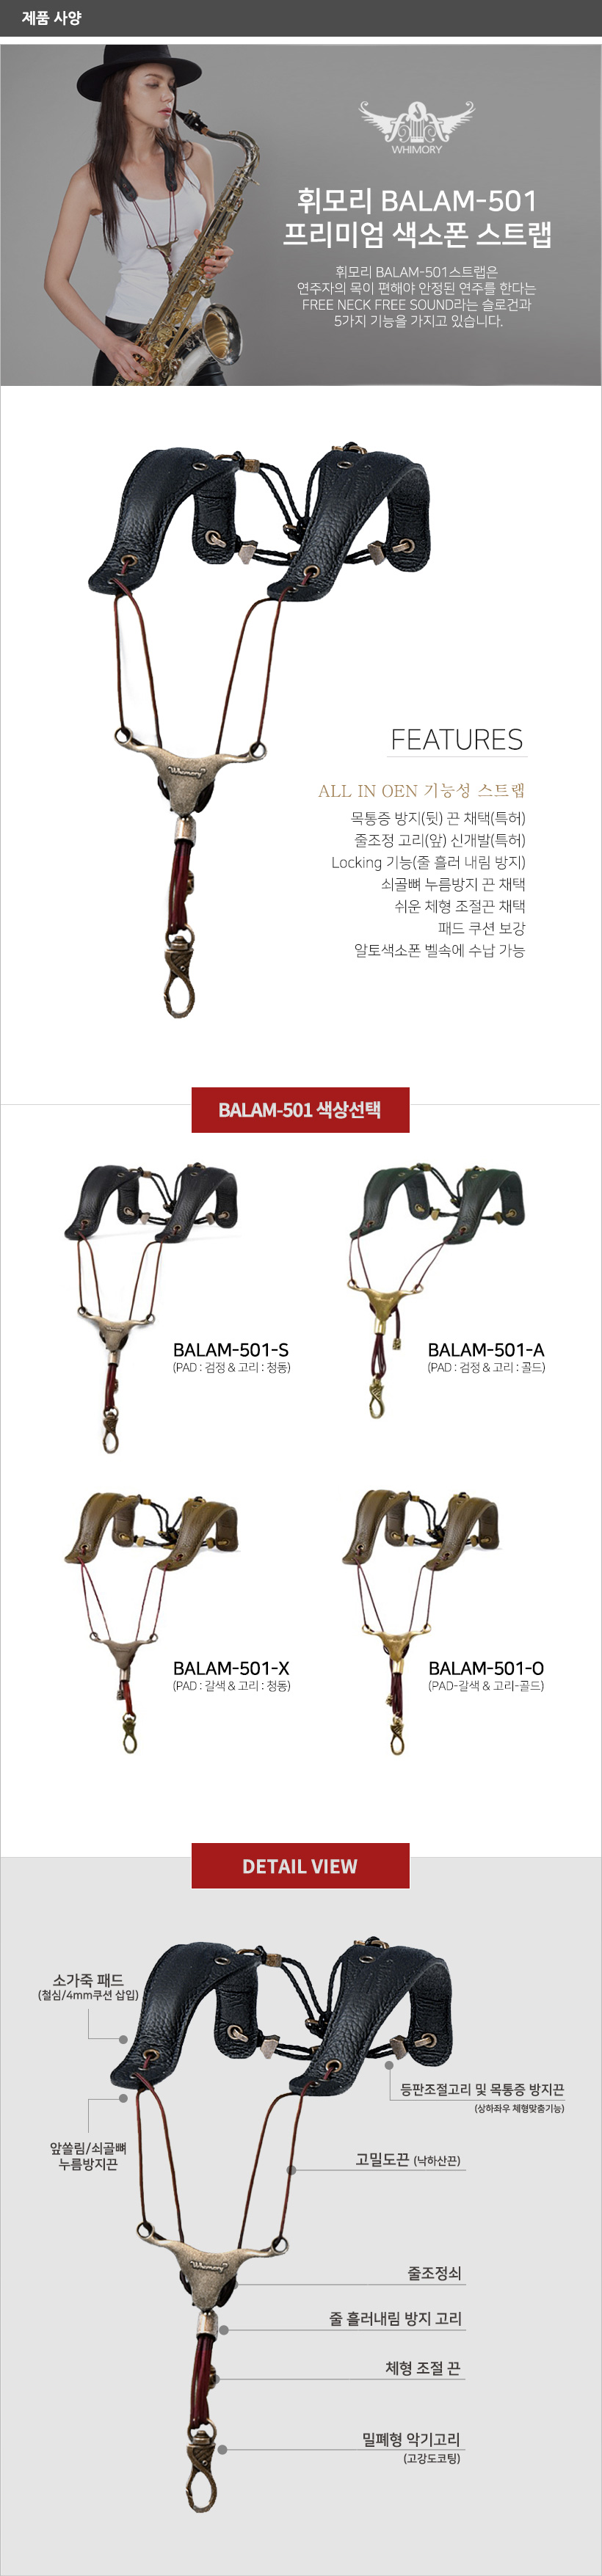 BALAM-501 제품 사양